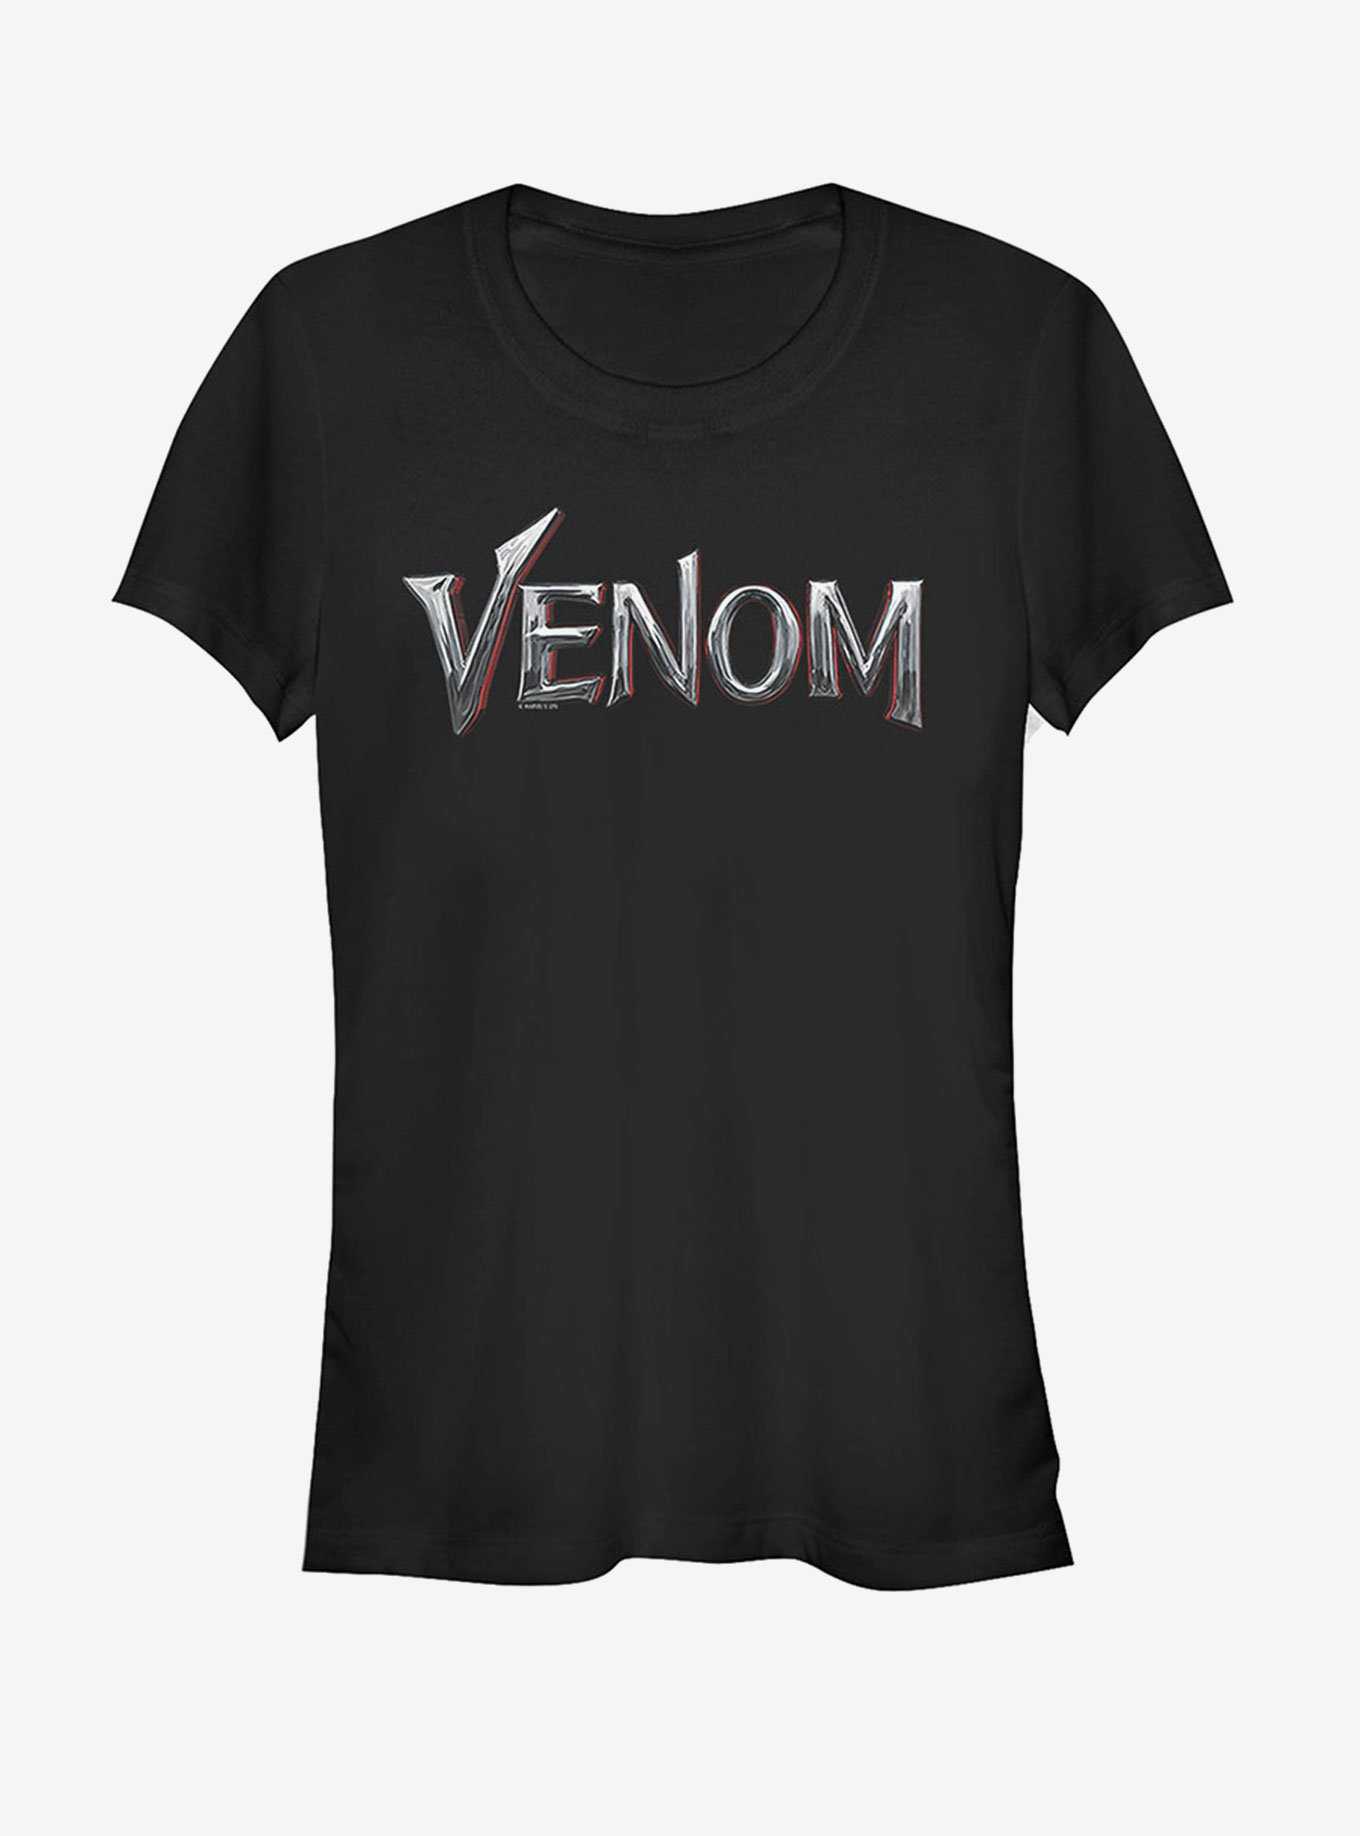 Marvel Venom Film Metallic Logo Girls T-Shirt, , hi-res